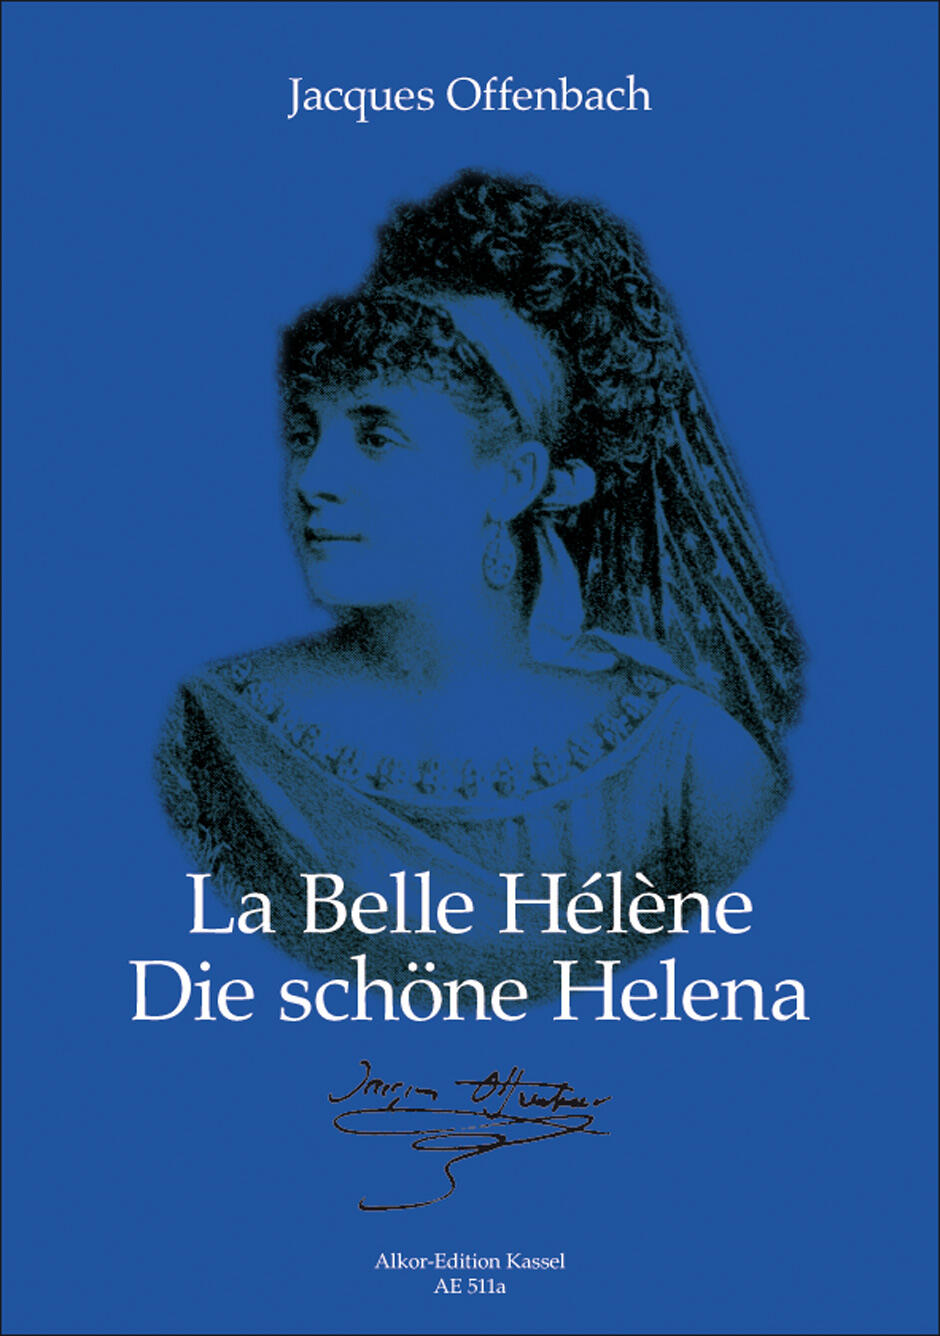 La belle Helene - Die schone Helena Opera buffa in three acts Jacques Offenbach Karl-Heinz Müller Opera Klavierauszug  AE511-90 : photo 1